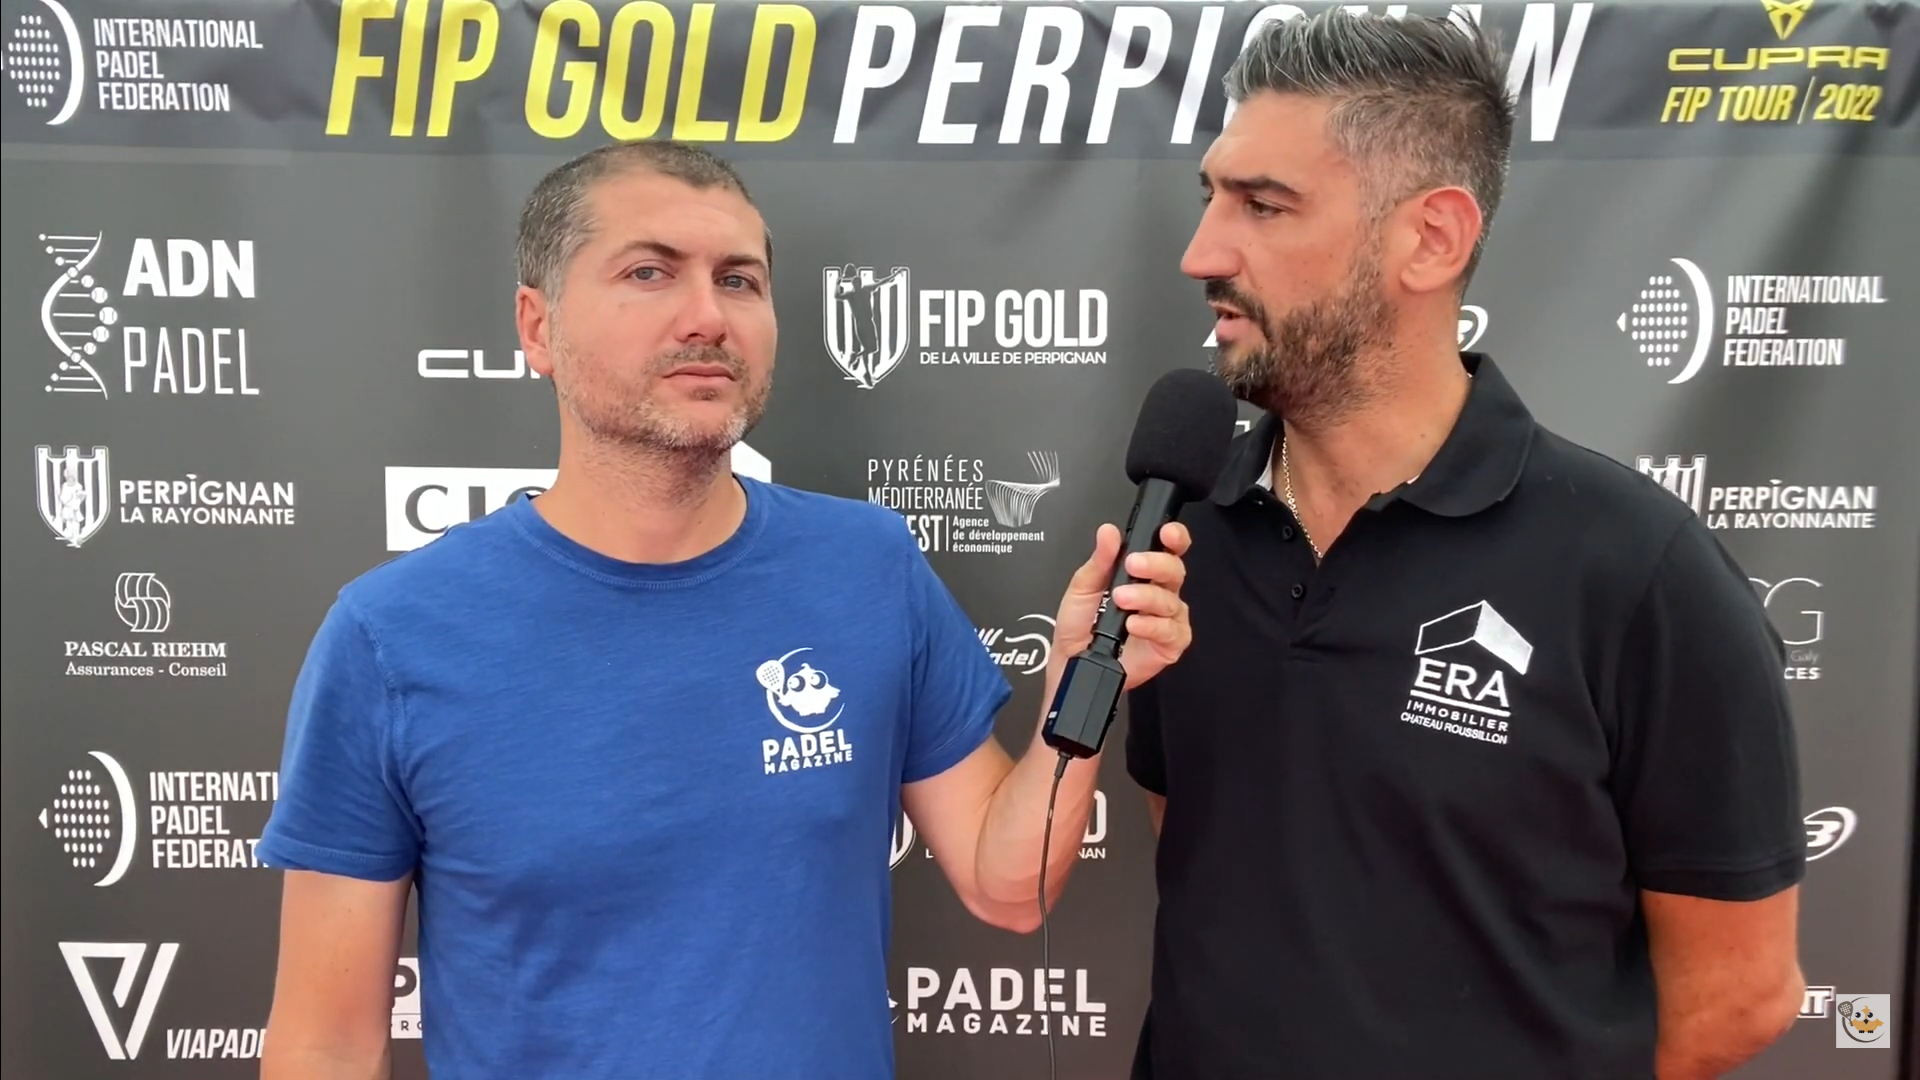 Anthony Pizzuto Intervju FIP Gold Perpignan